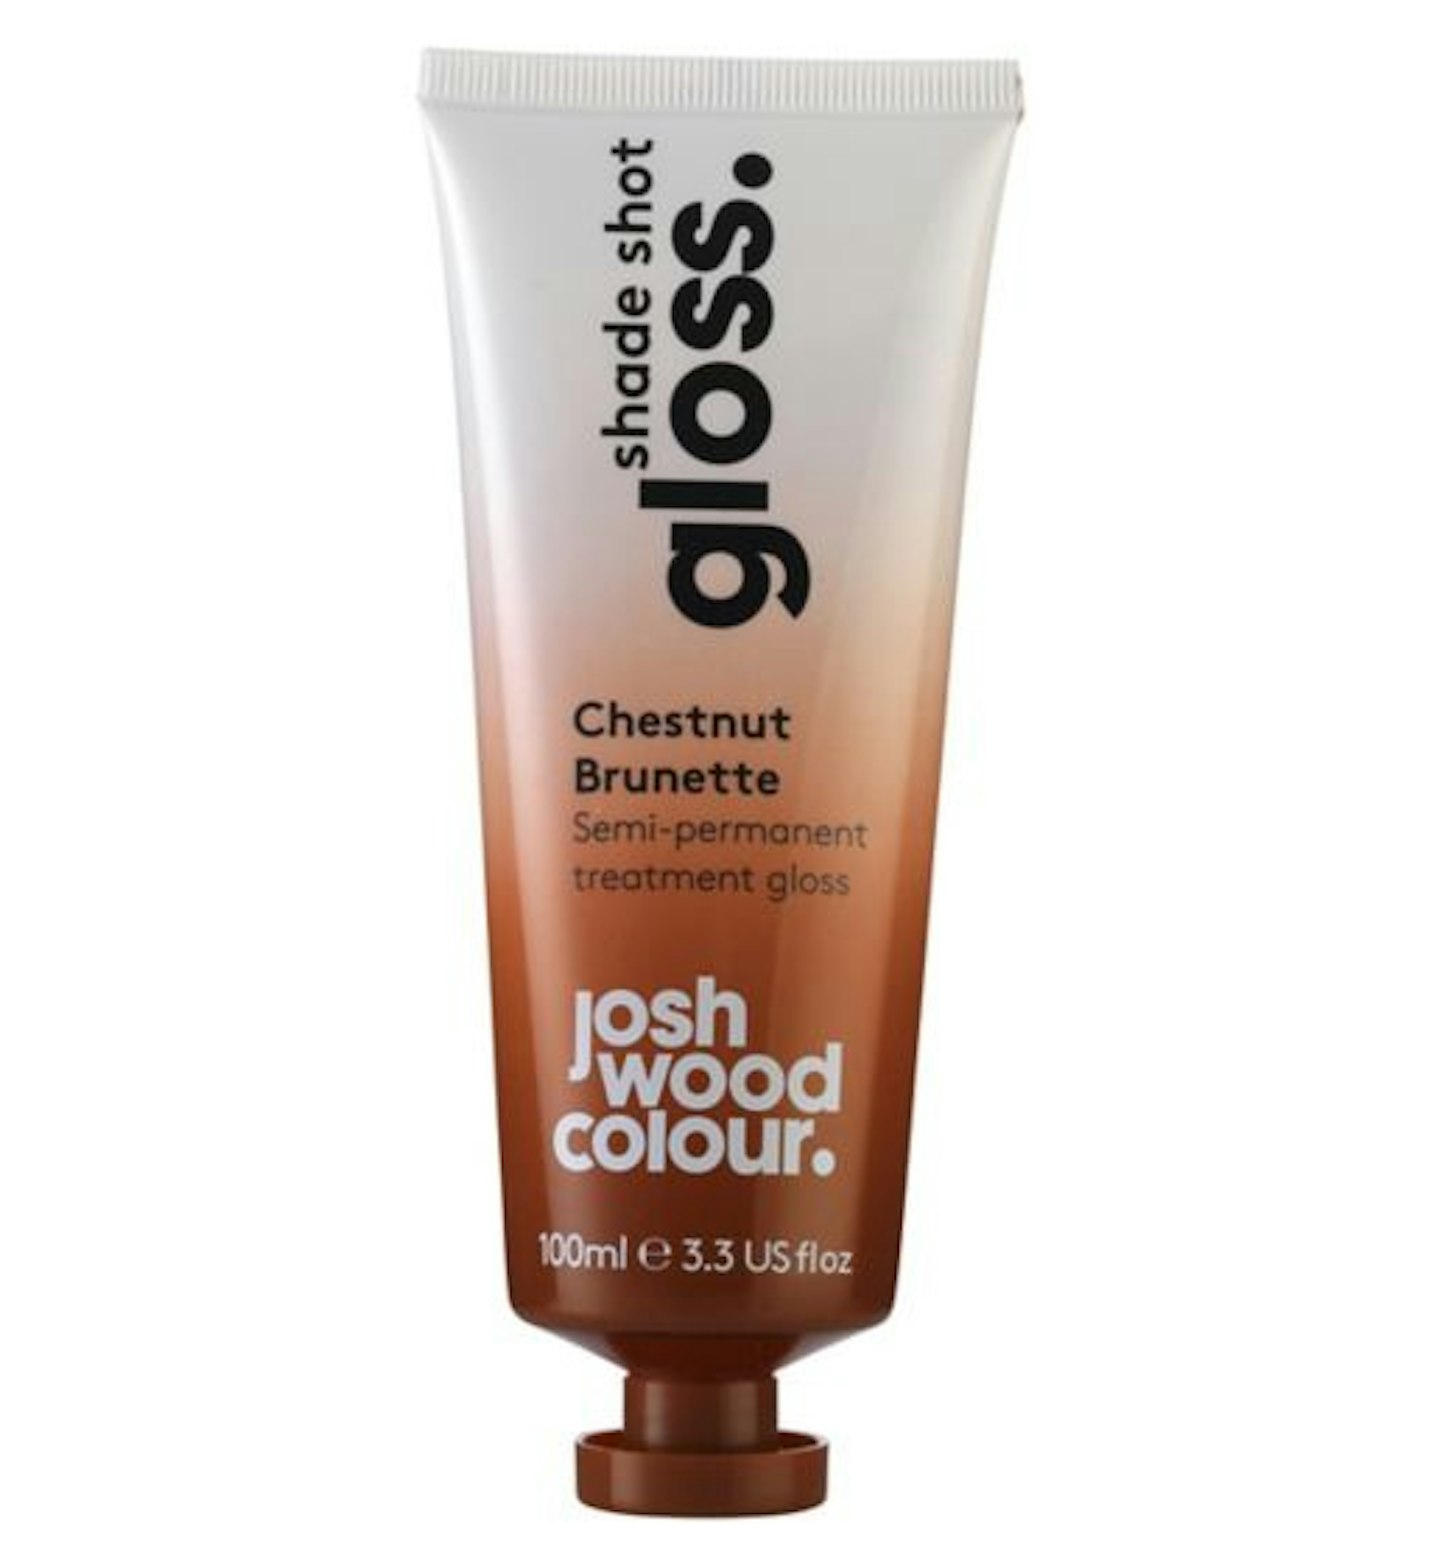 Josh Wood Colour Shade Shot Gloss Chestnut Brunette Treatment 100ml